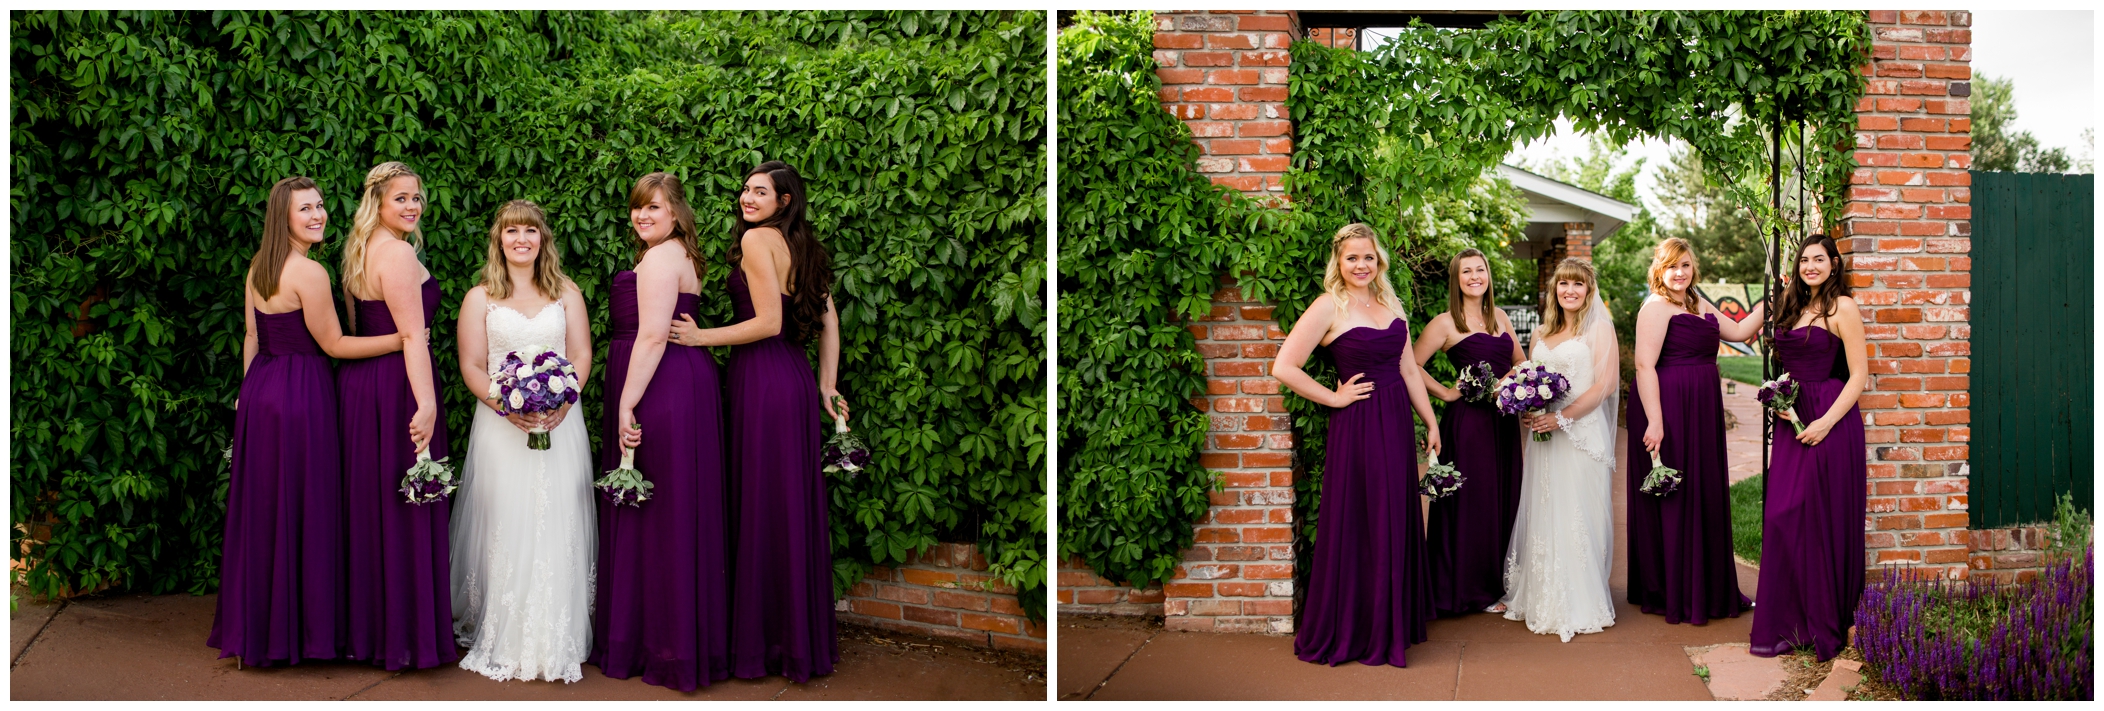 long purple bridesmaids dresses 